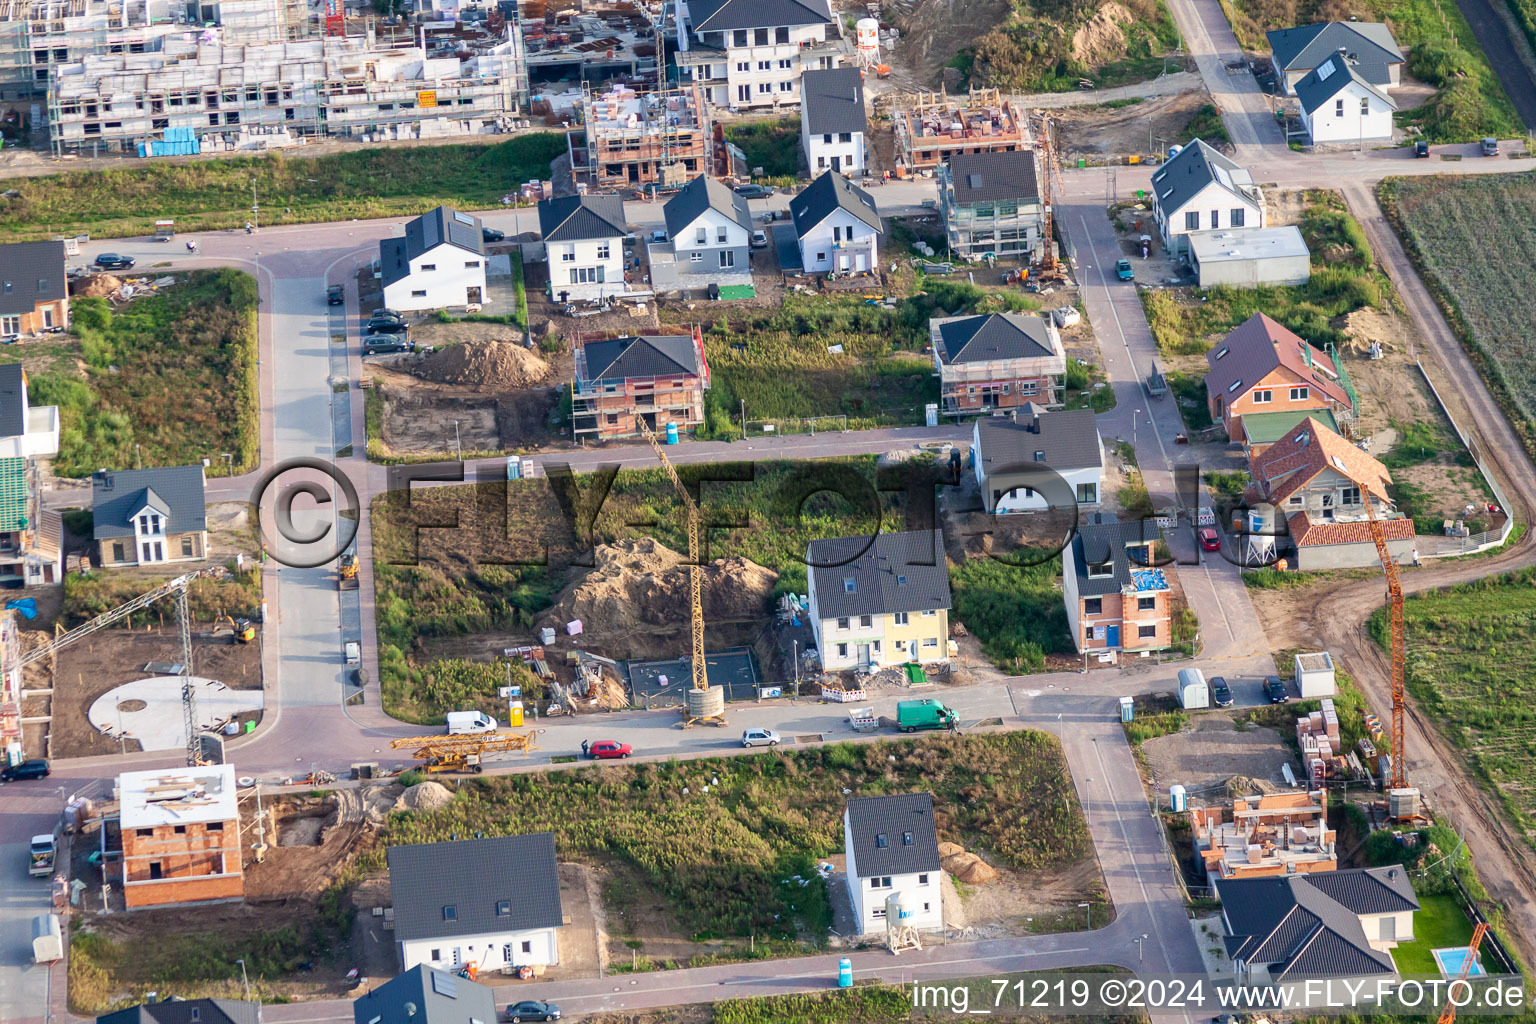 Aerial photograpy of New development area Betheny-Allee in the district Schauernheim in Dannstadt-Schauernheim in the state Rhineland-Palatinate, Germany